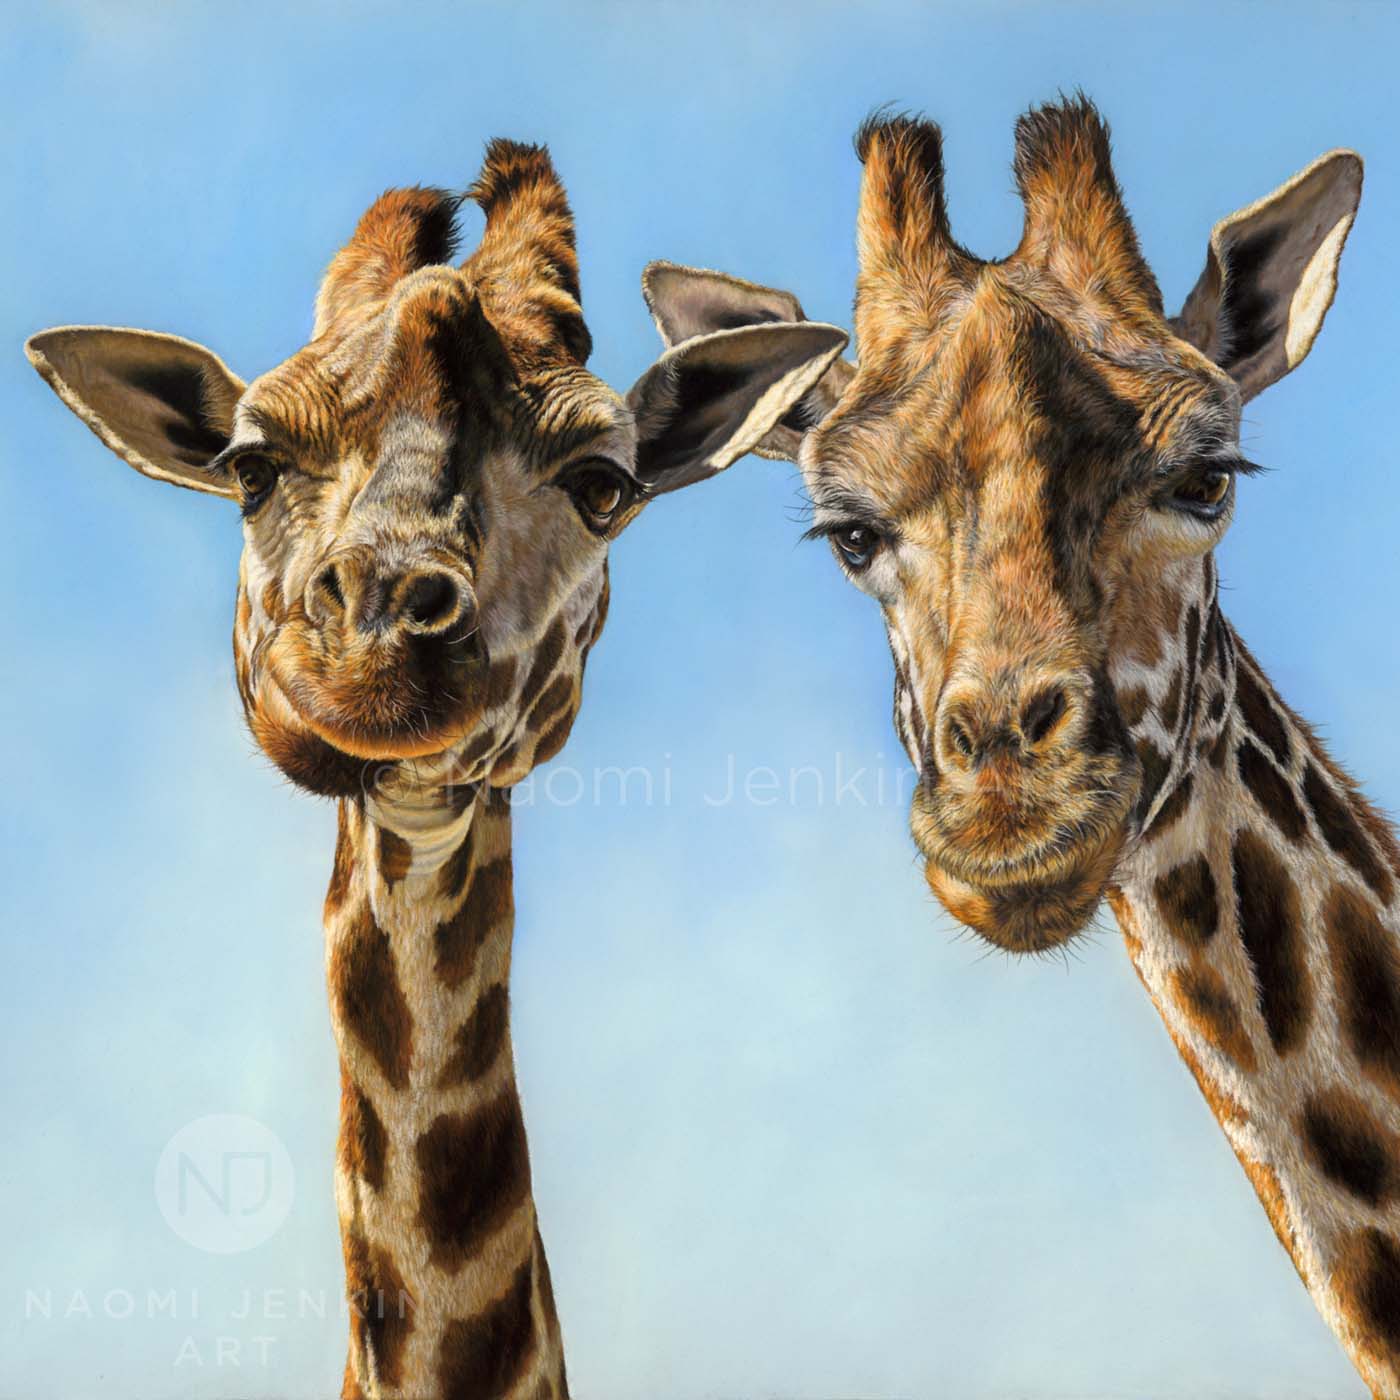 Wildlife art of a giraffe by Naomi Jenkin Art. 